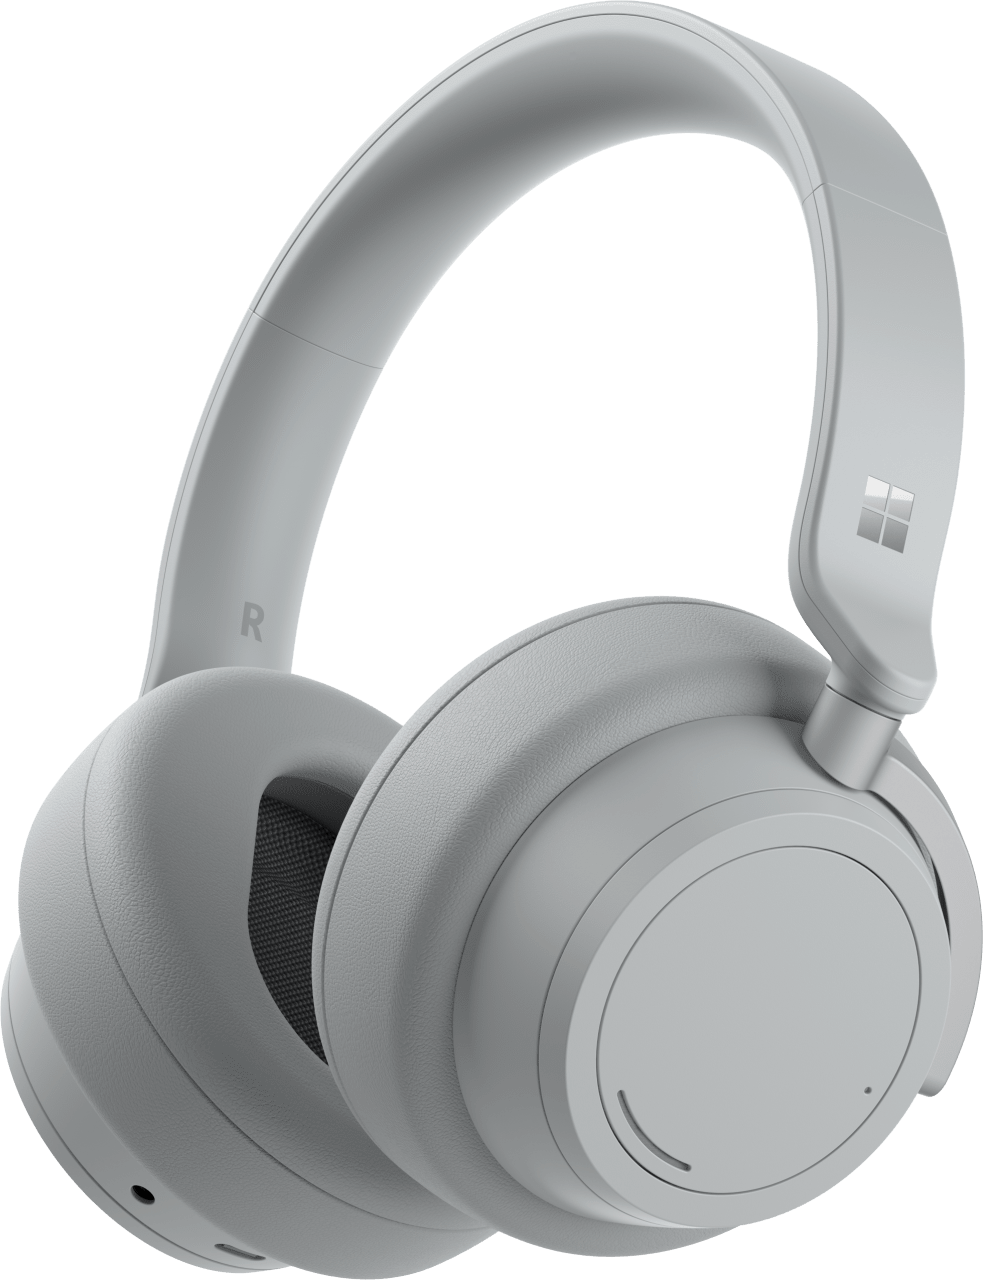 Hellgrau Microsoft Surface 2 Over-ear Bluetooth Headphones.1